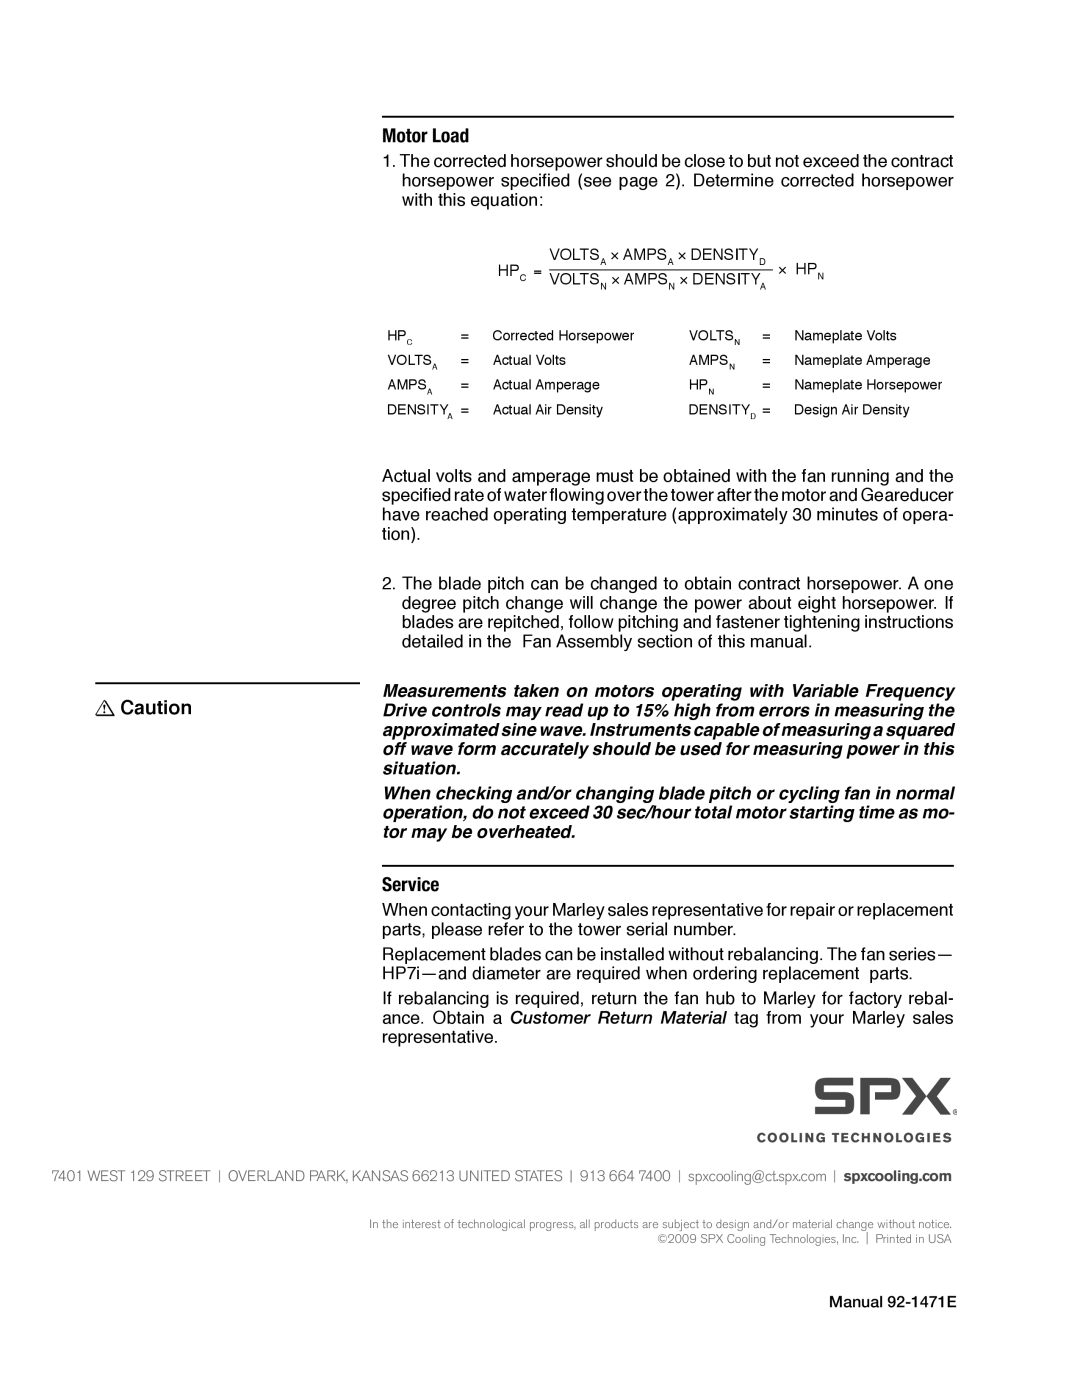 SPX Cooling Technologies HP7I user manual Motor Load, Service 